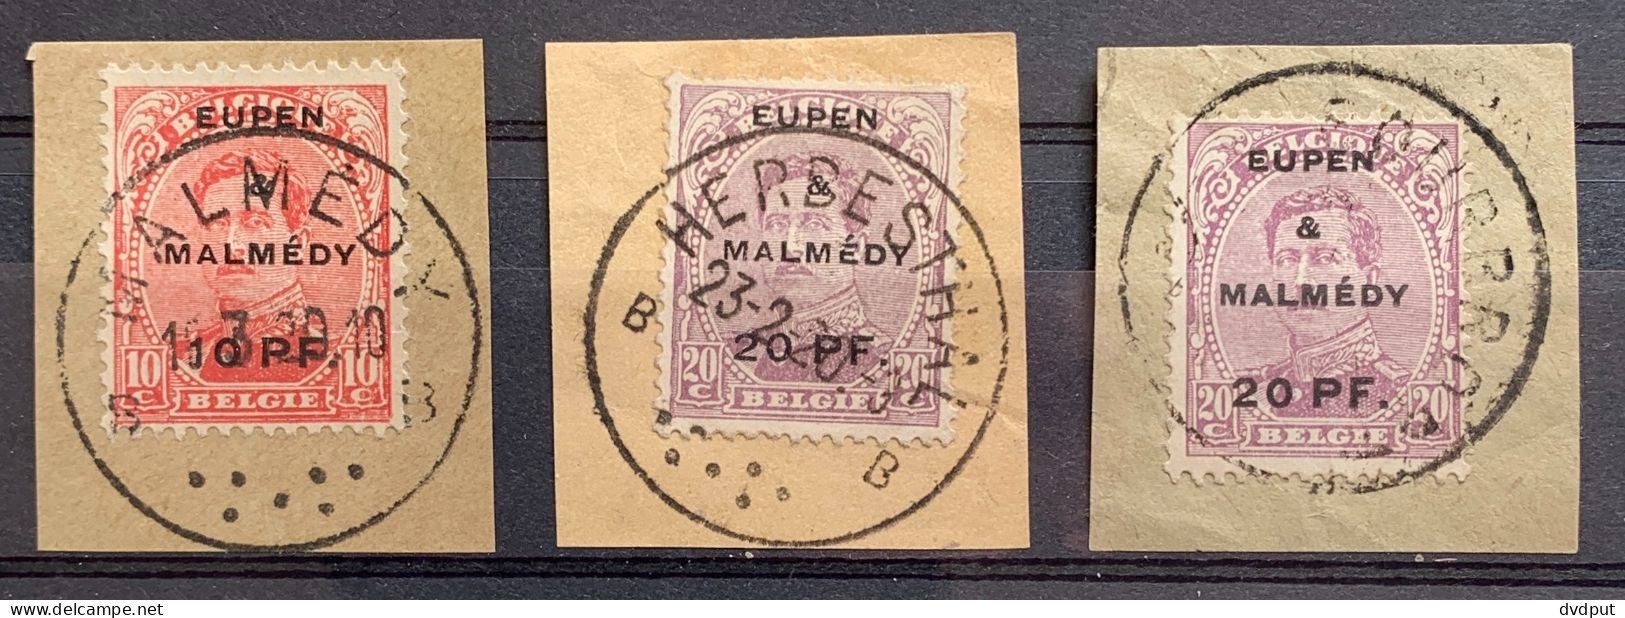 België, 1920, OC56+58, Op Fragment, Zeer Mooi - OC55/105 Eupen & Malmédy